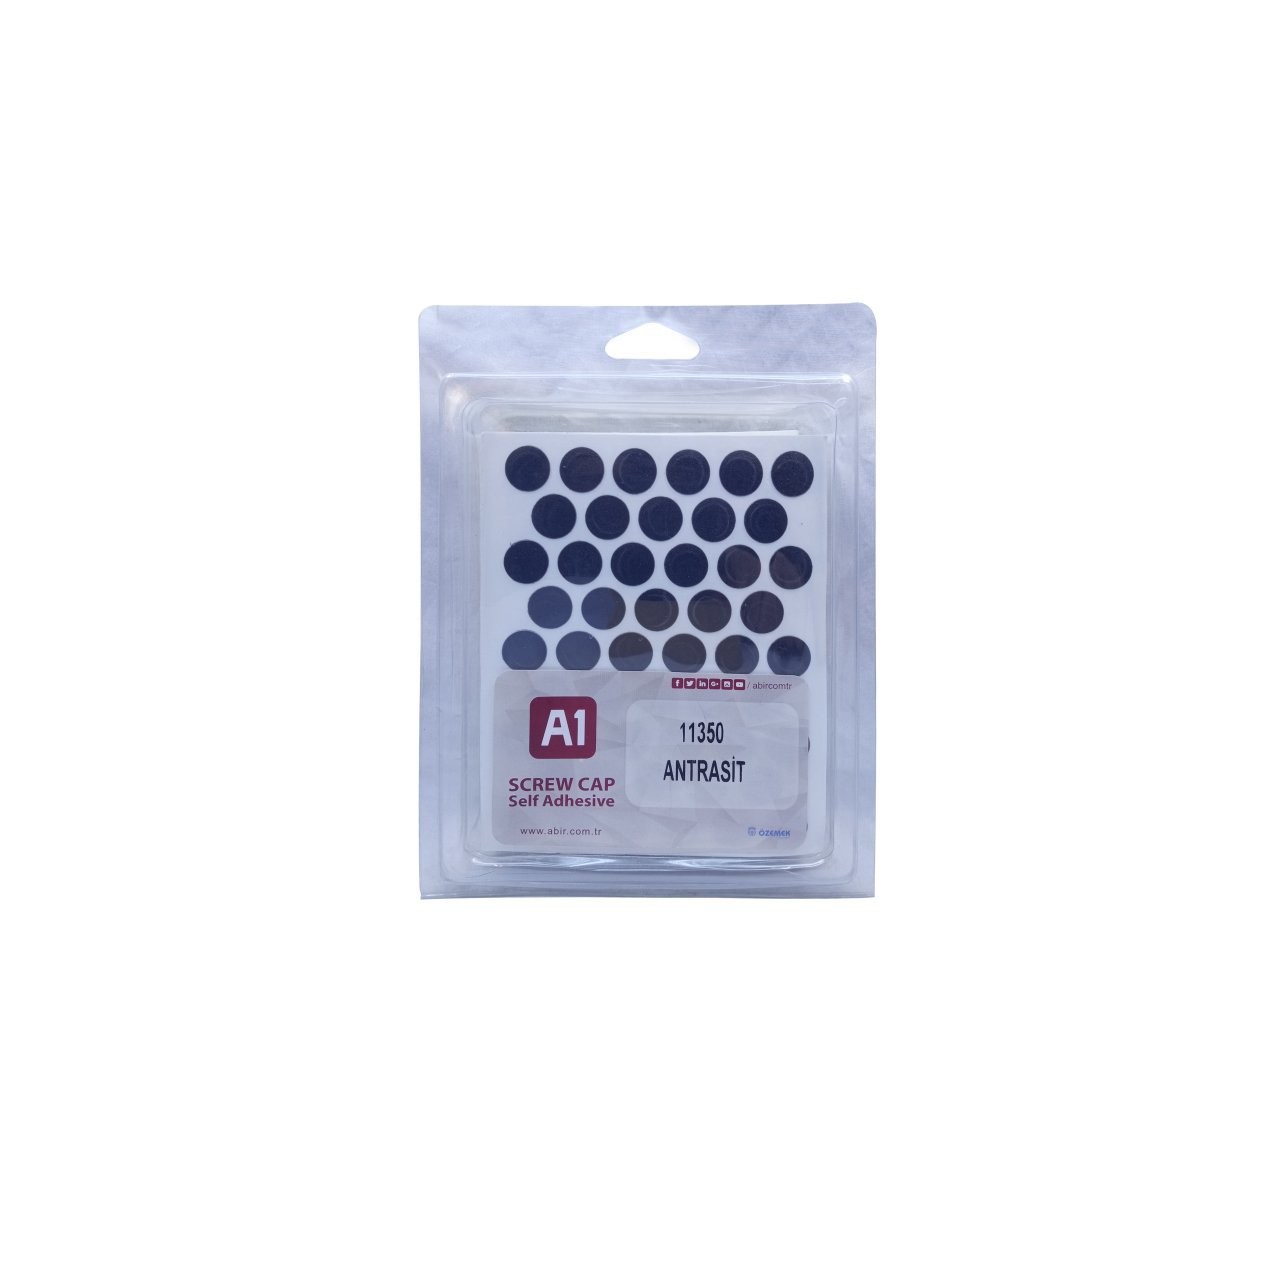 PVC Self-Adhesive Screw Cap Solid Color 14mm Anthracite